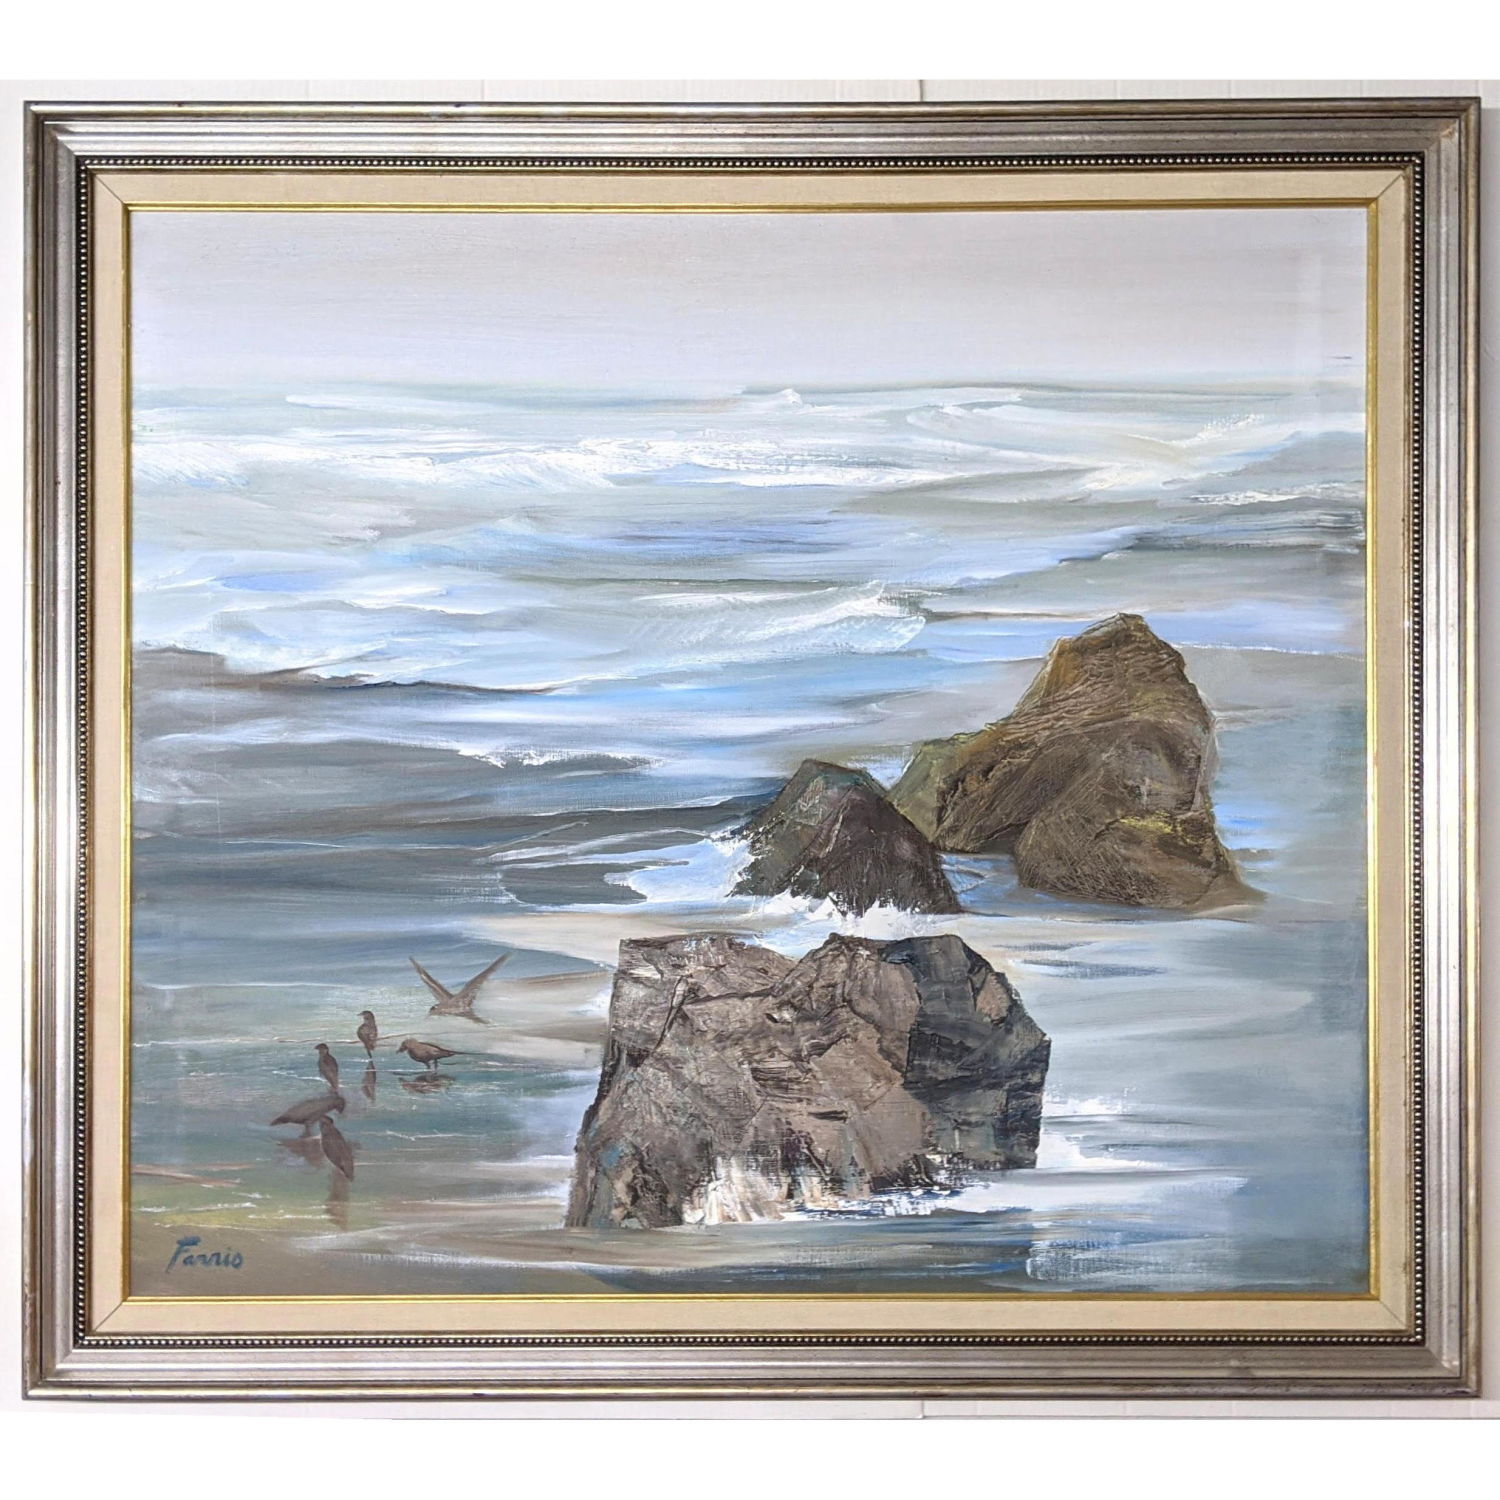 FARRIS Rocky Beach Painting on